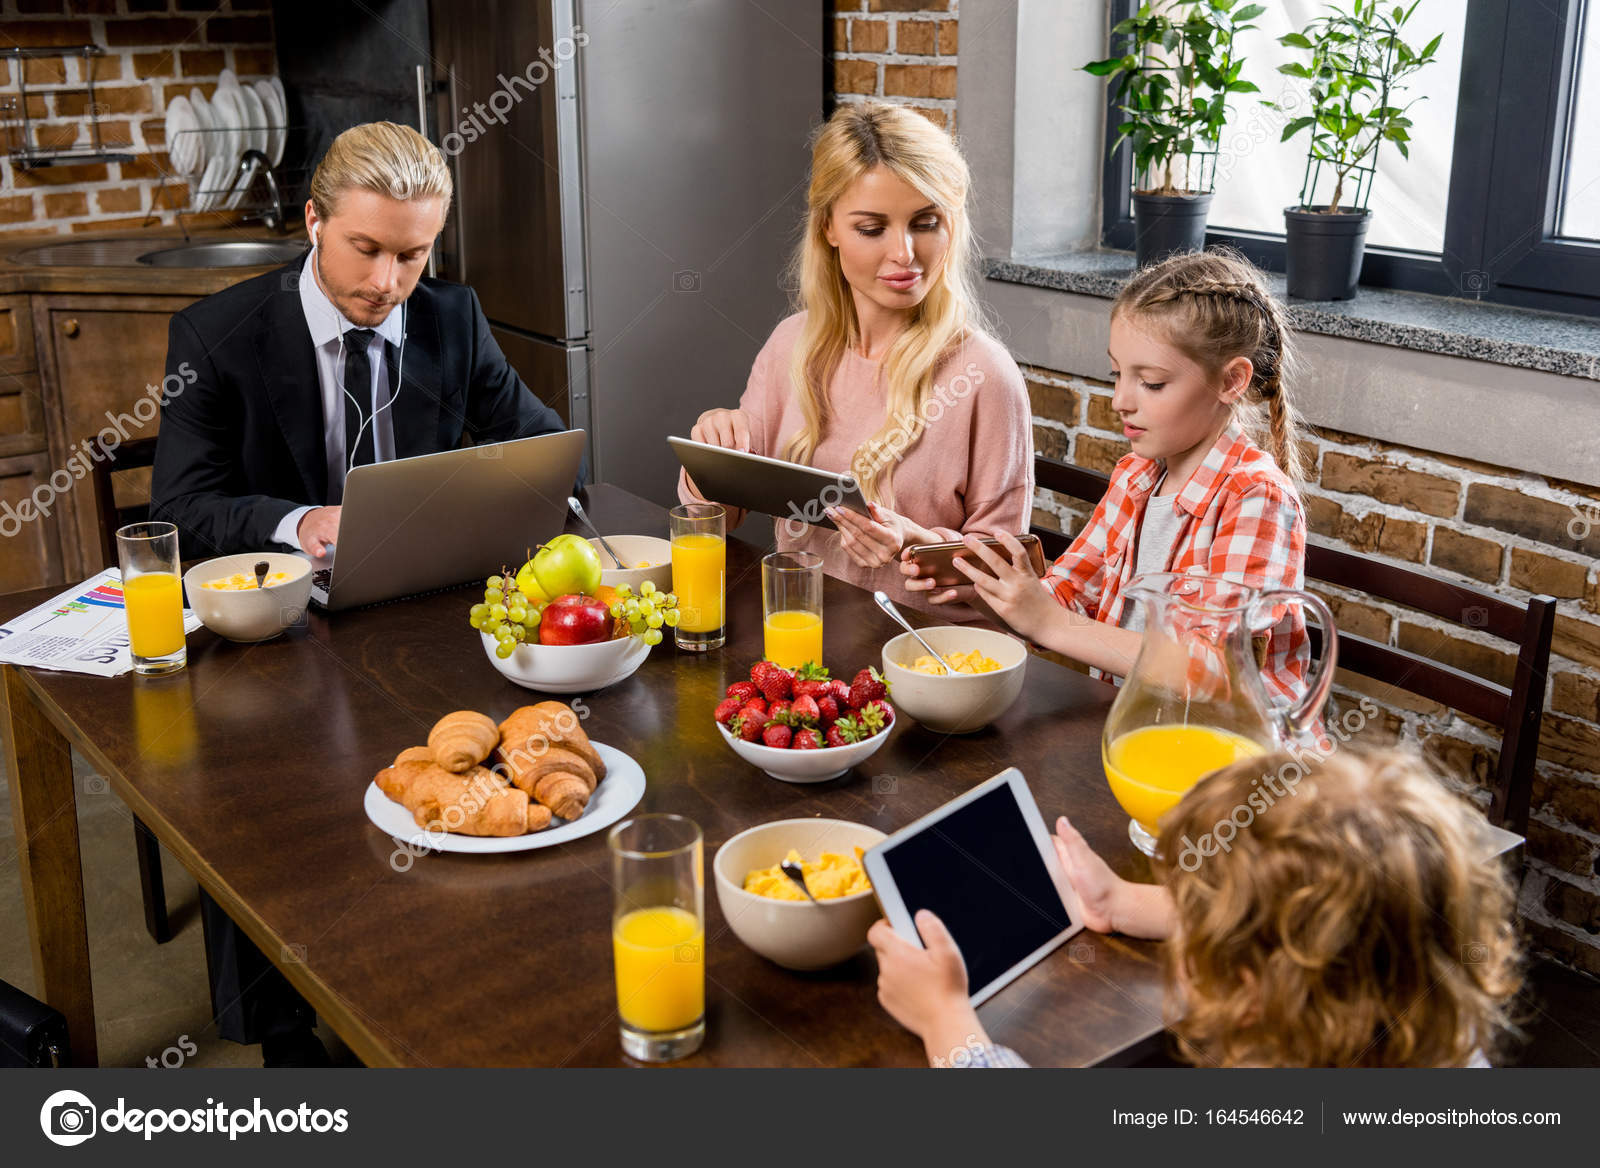 https://st3.depositphotos.com/12039478/16454/i/1600/depositphotos_164546642-stock-photo-family-using-gadgets-at-breakfast.jpg